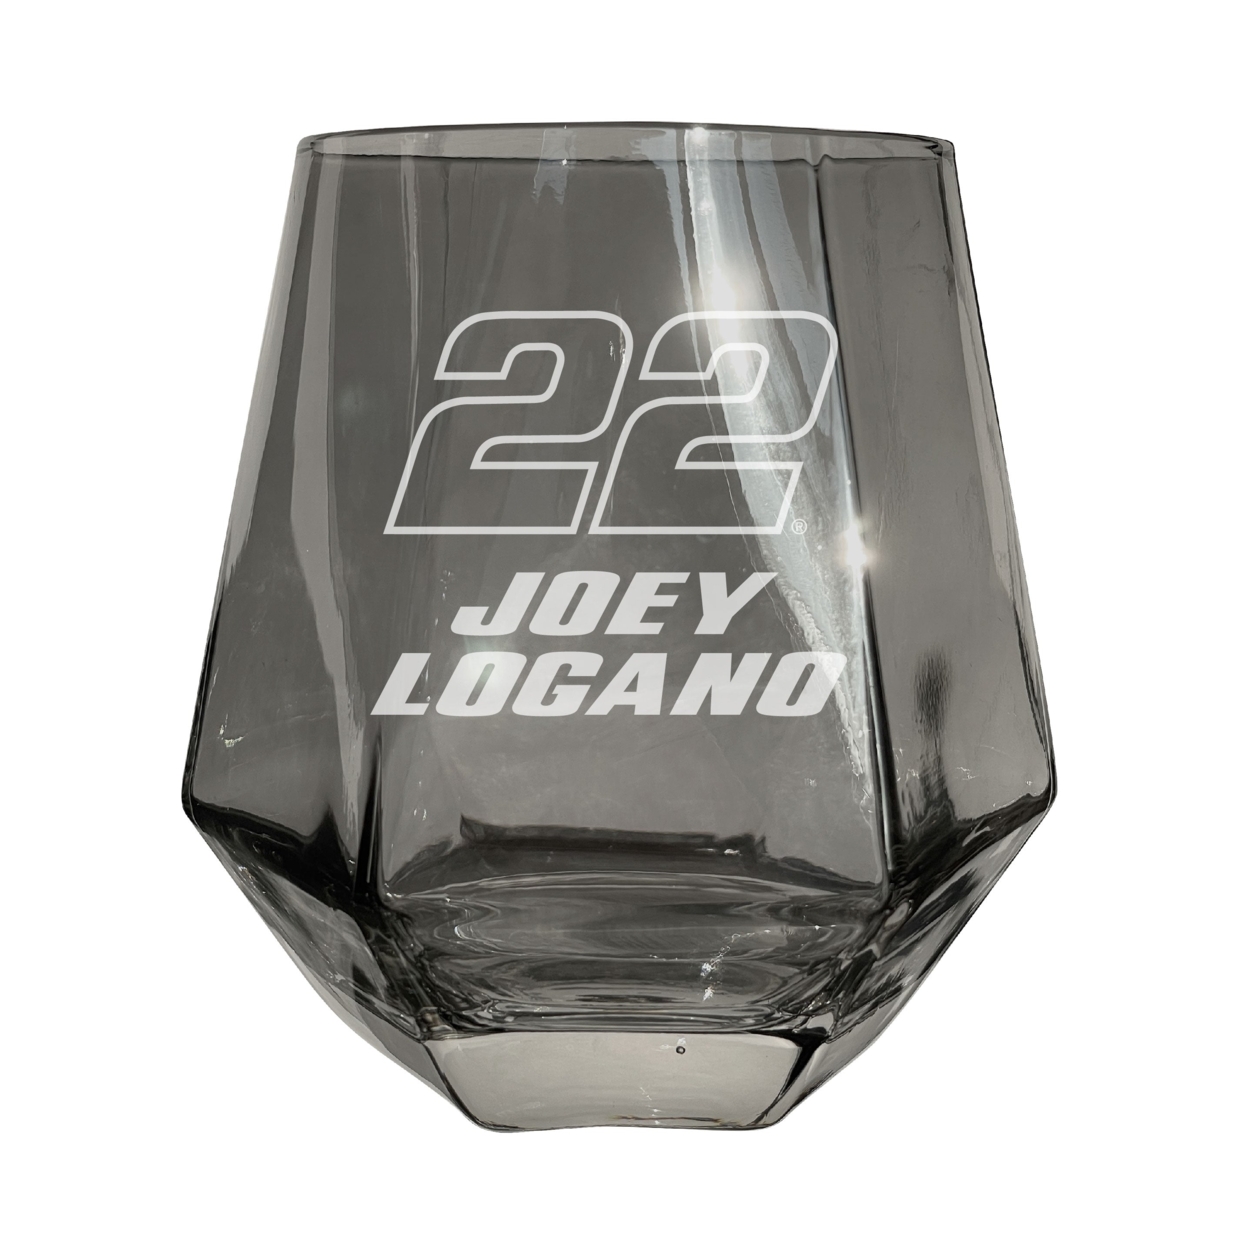 #22 Joey Logano Officially Licensed 10 Oz Engraved Diamond Wine Glass - Grey, Single